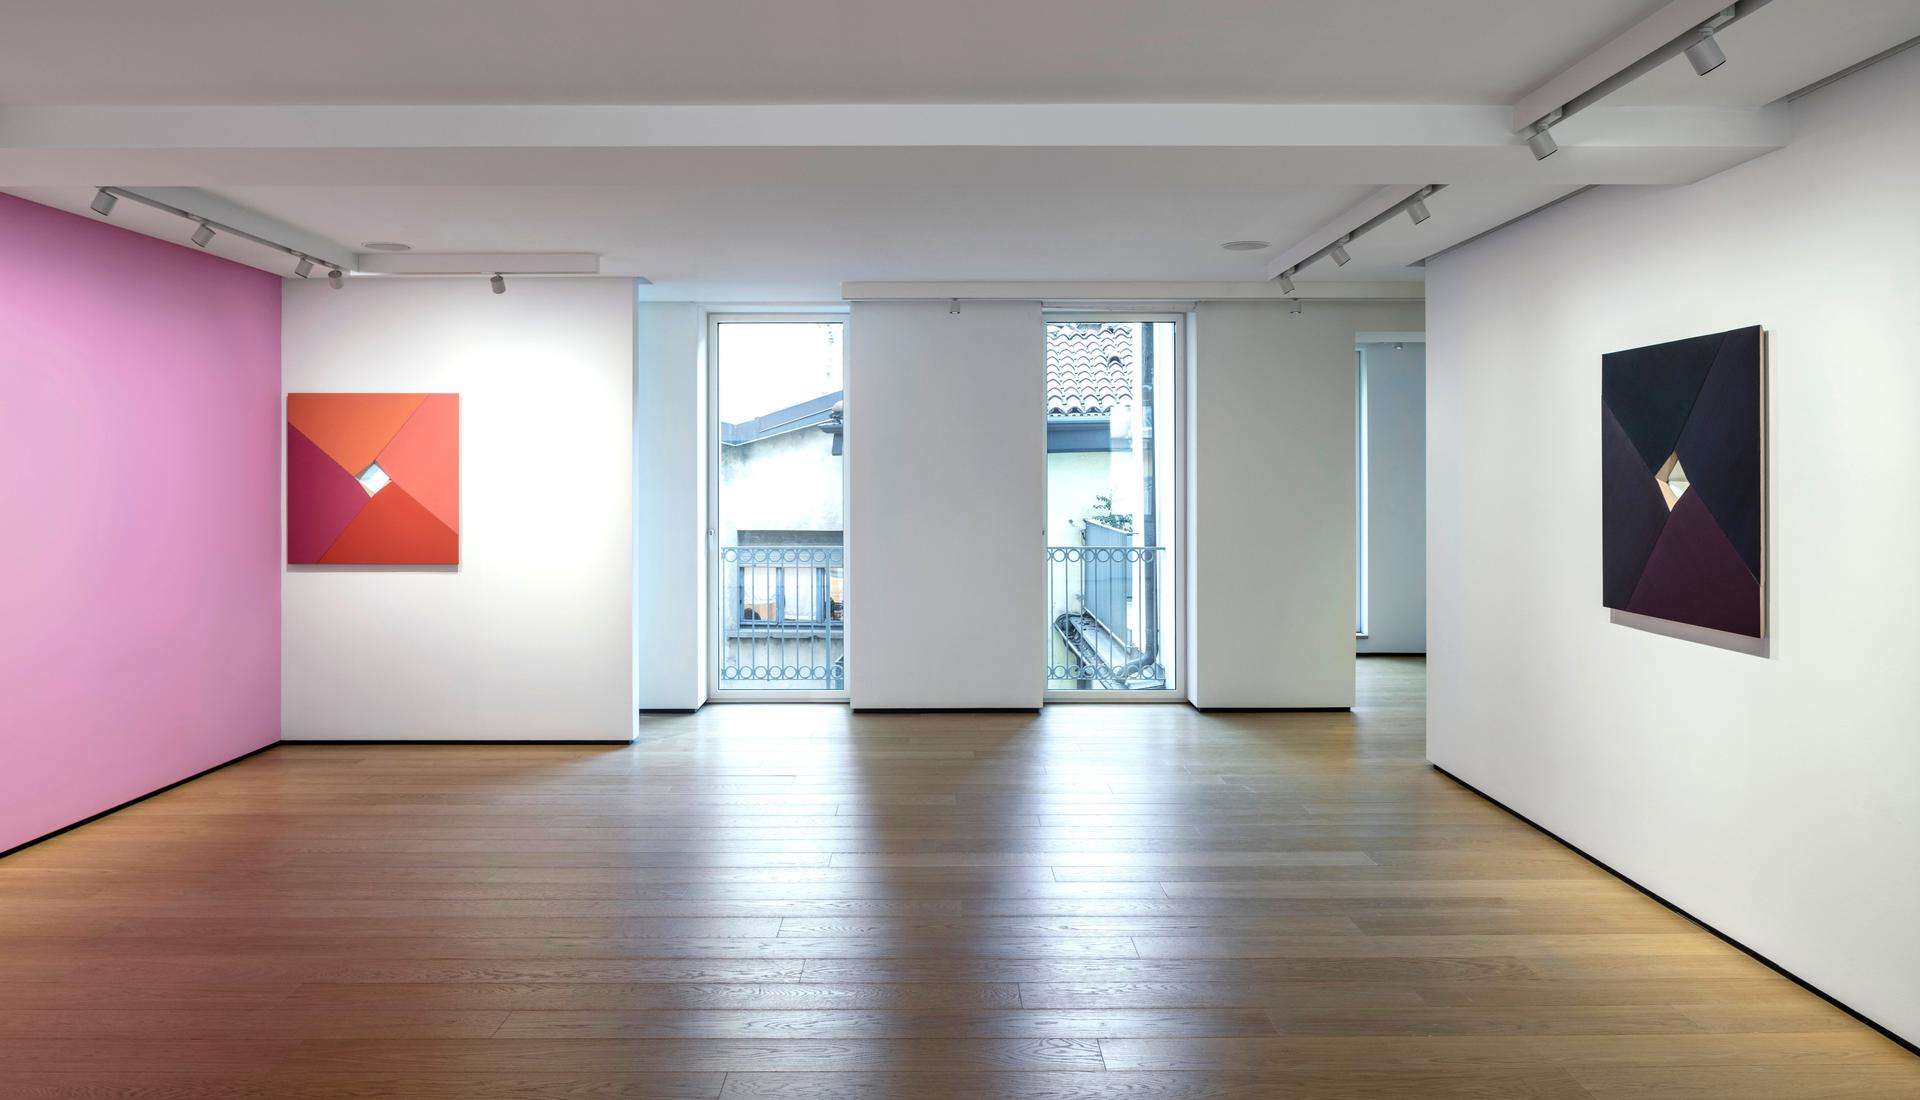 Sean Shanahan. Cuore a fette, BUILDING, Milano, Installation view, Ph. Luca Casonato 